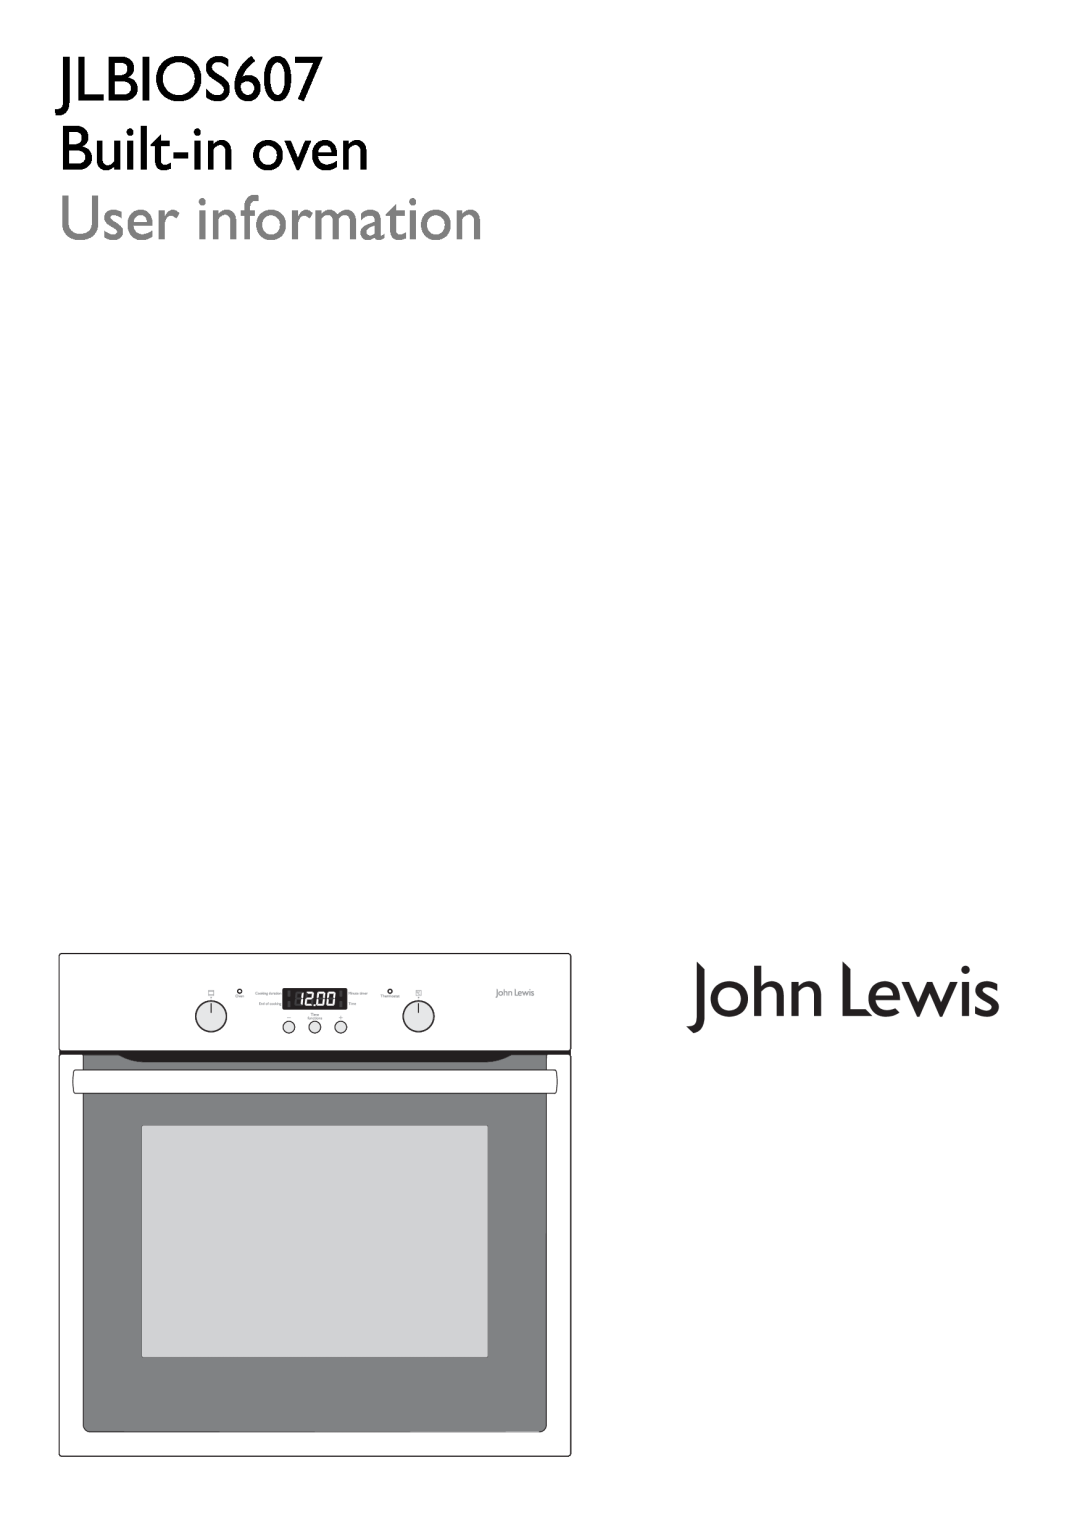 John Lewis manual JLBIOS607 Built-inoven User information 